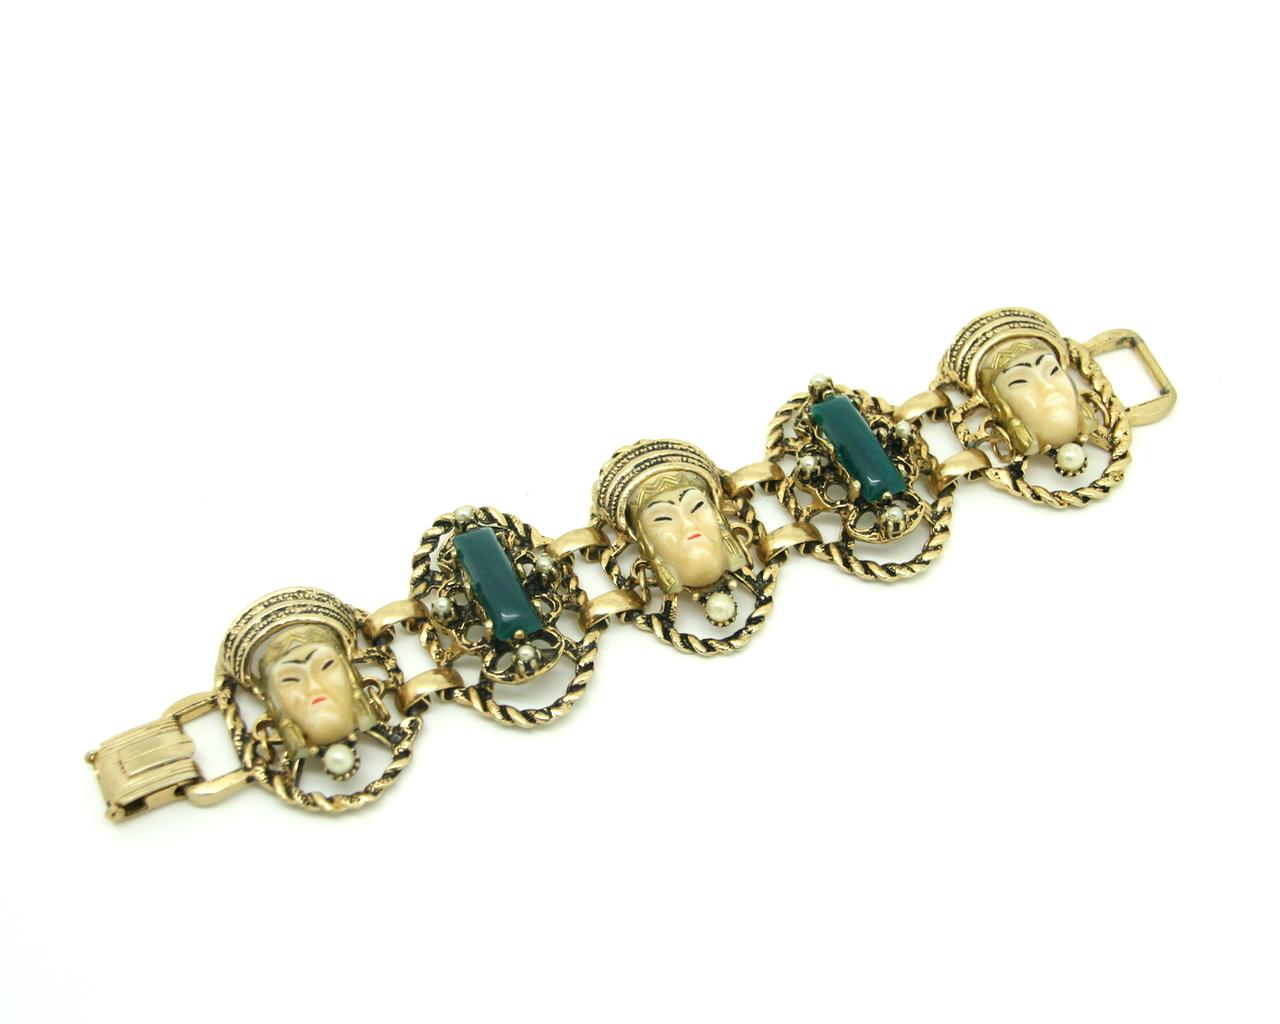 1950's SELRO siam princess & green cabochon bracelet